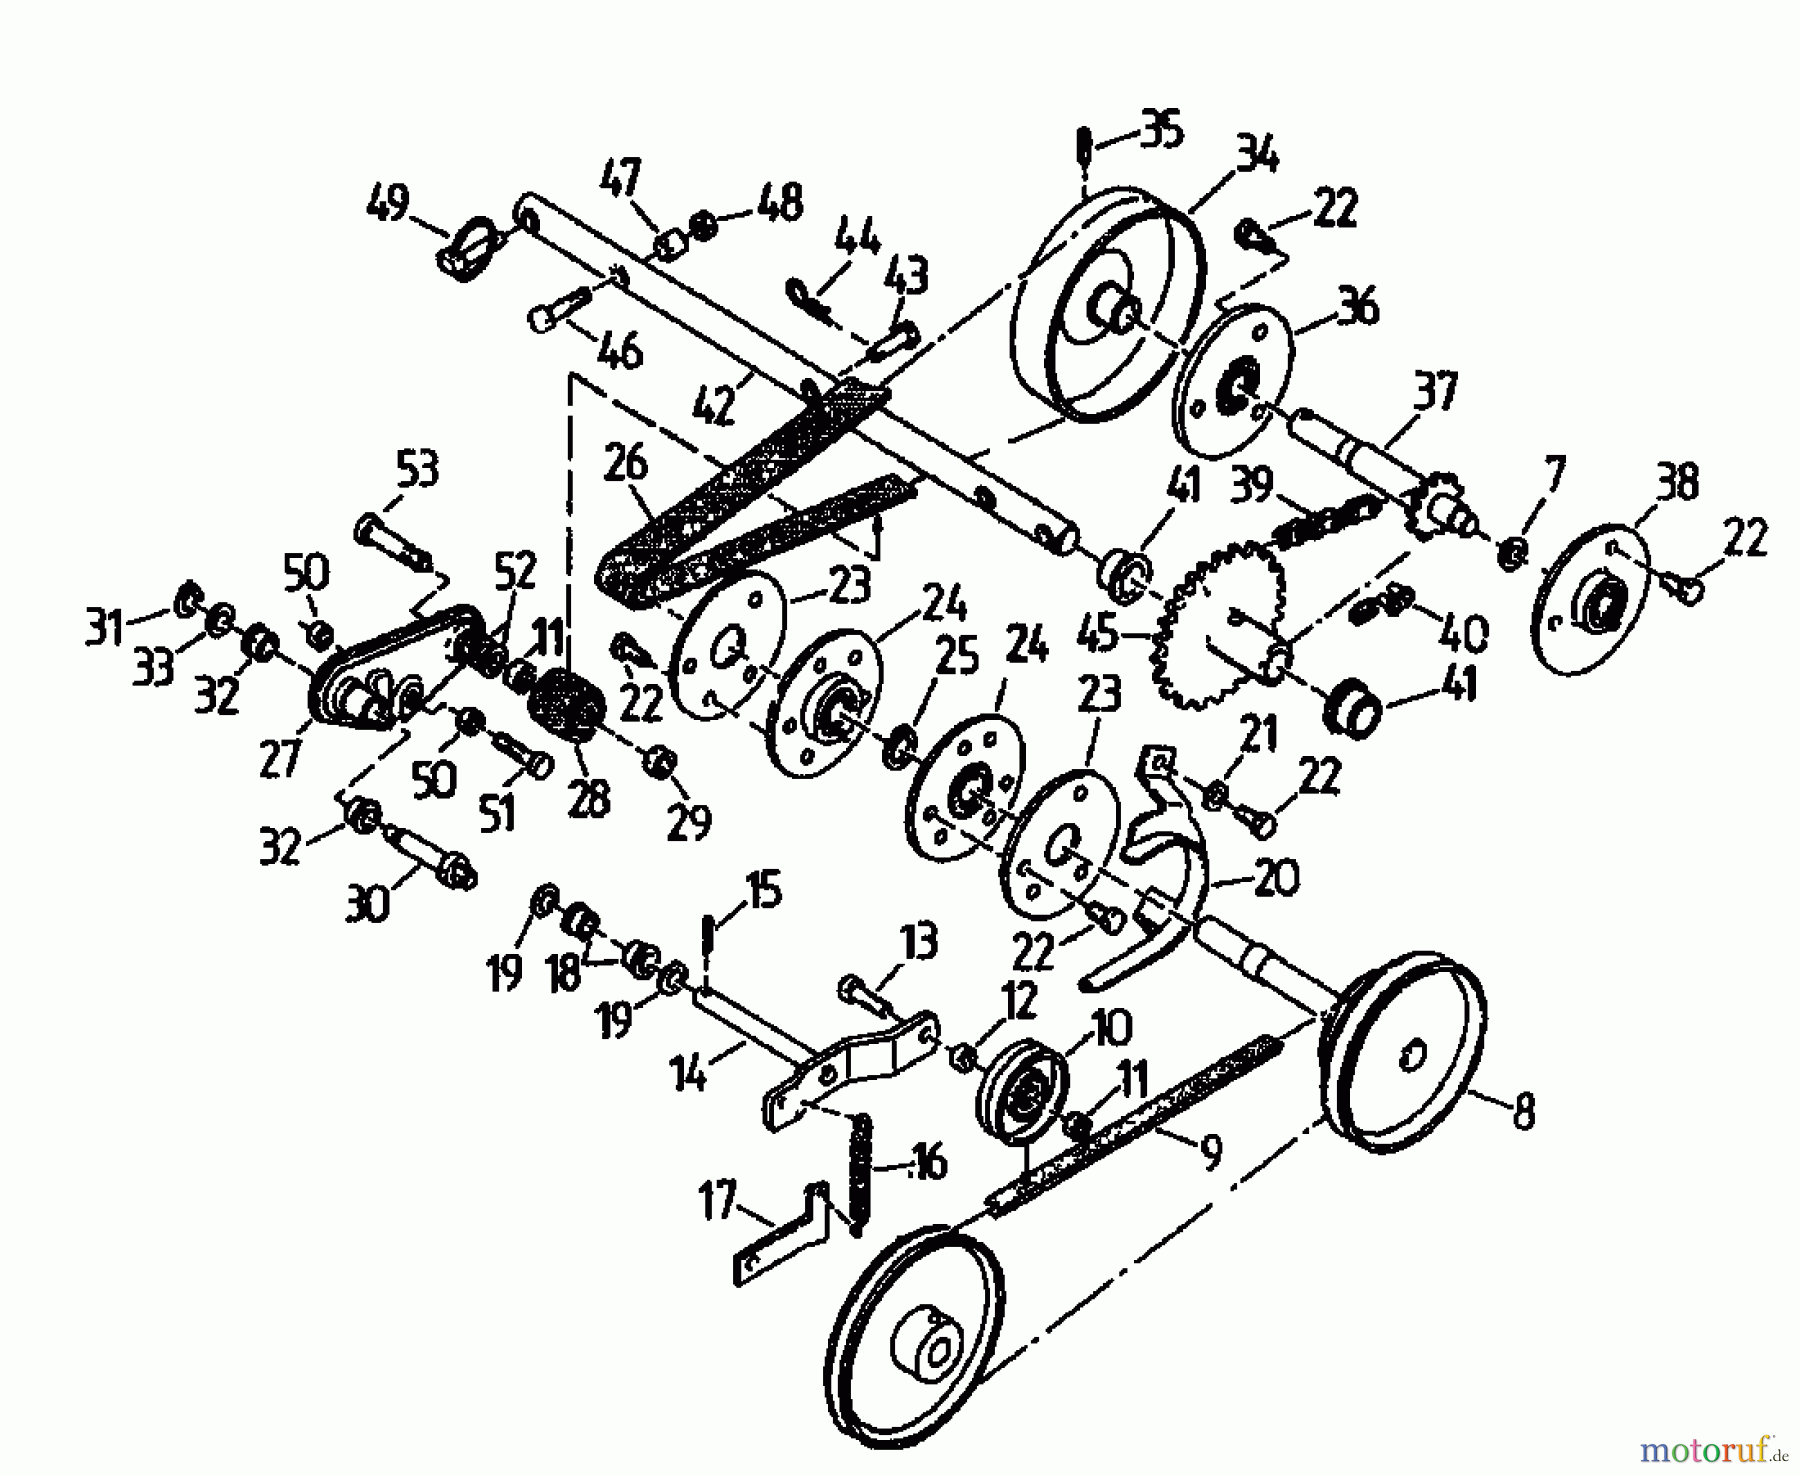  Gutbrod Cutter bar mower BM 91 07517.02  (1994) Drive system